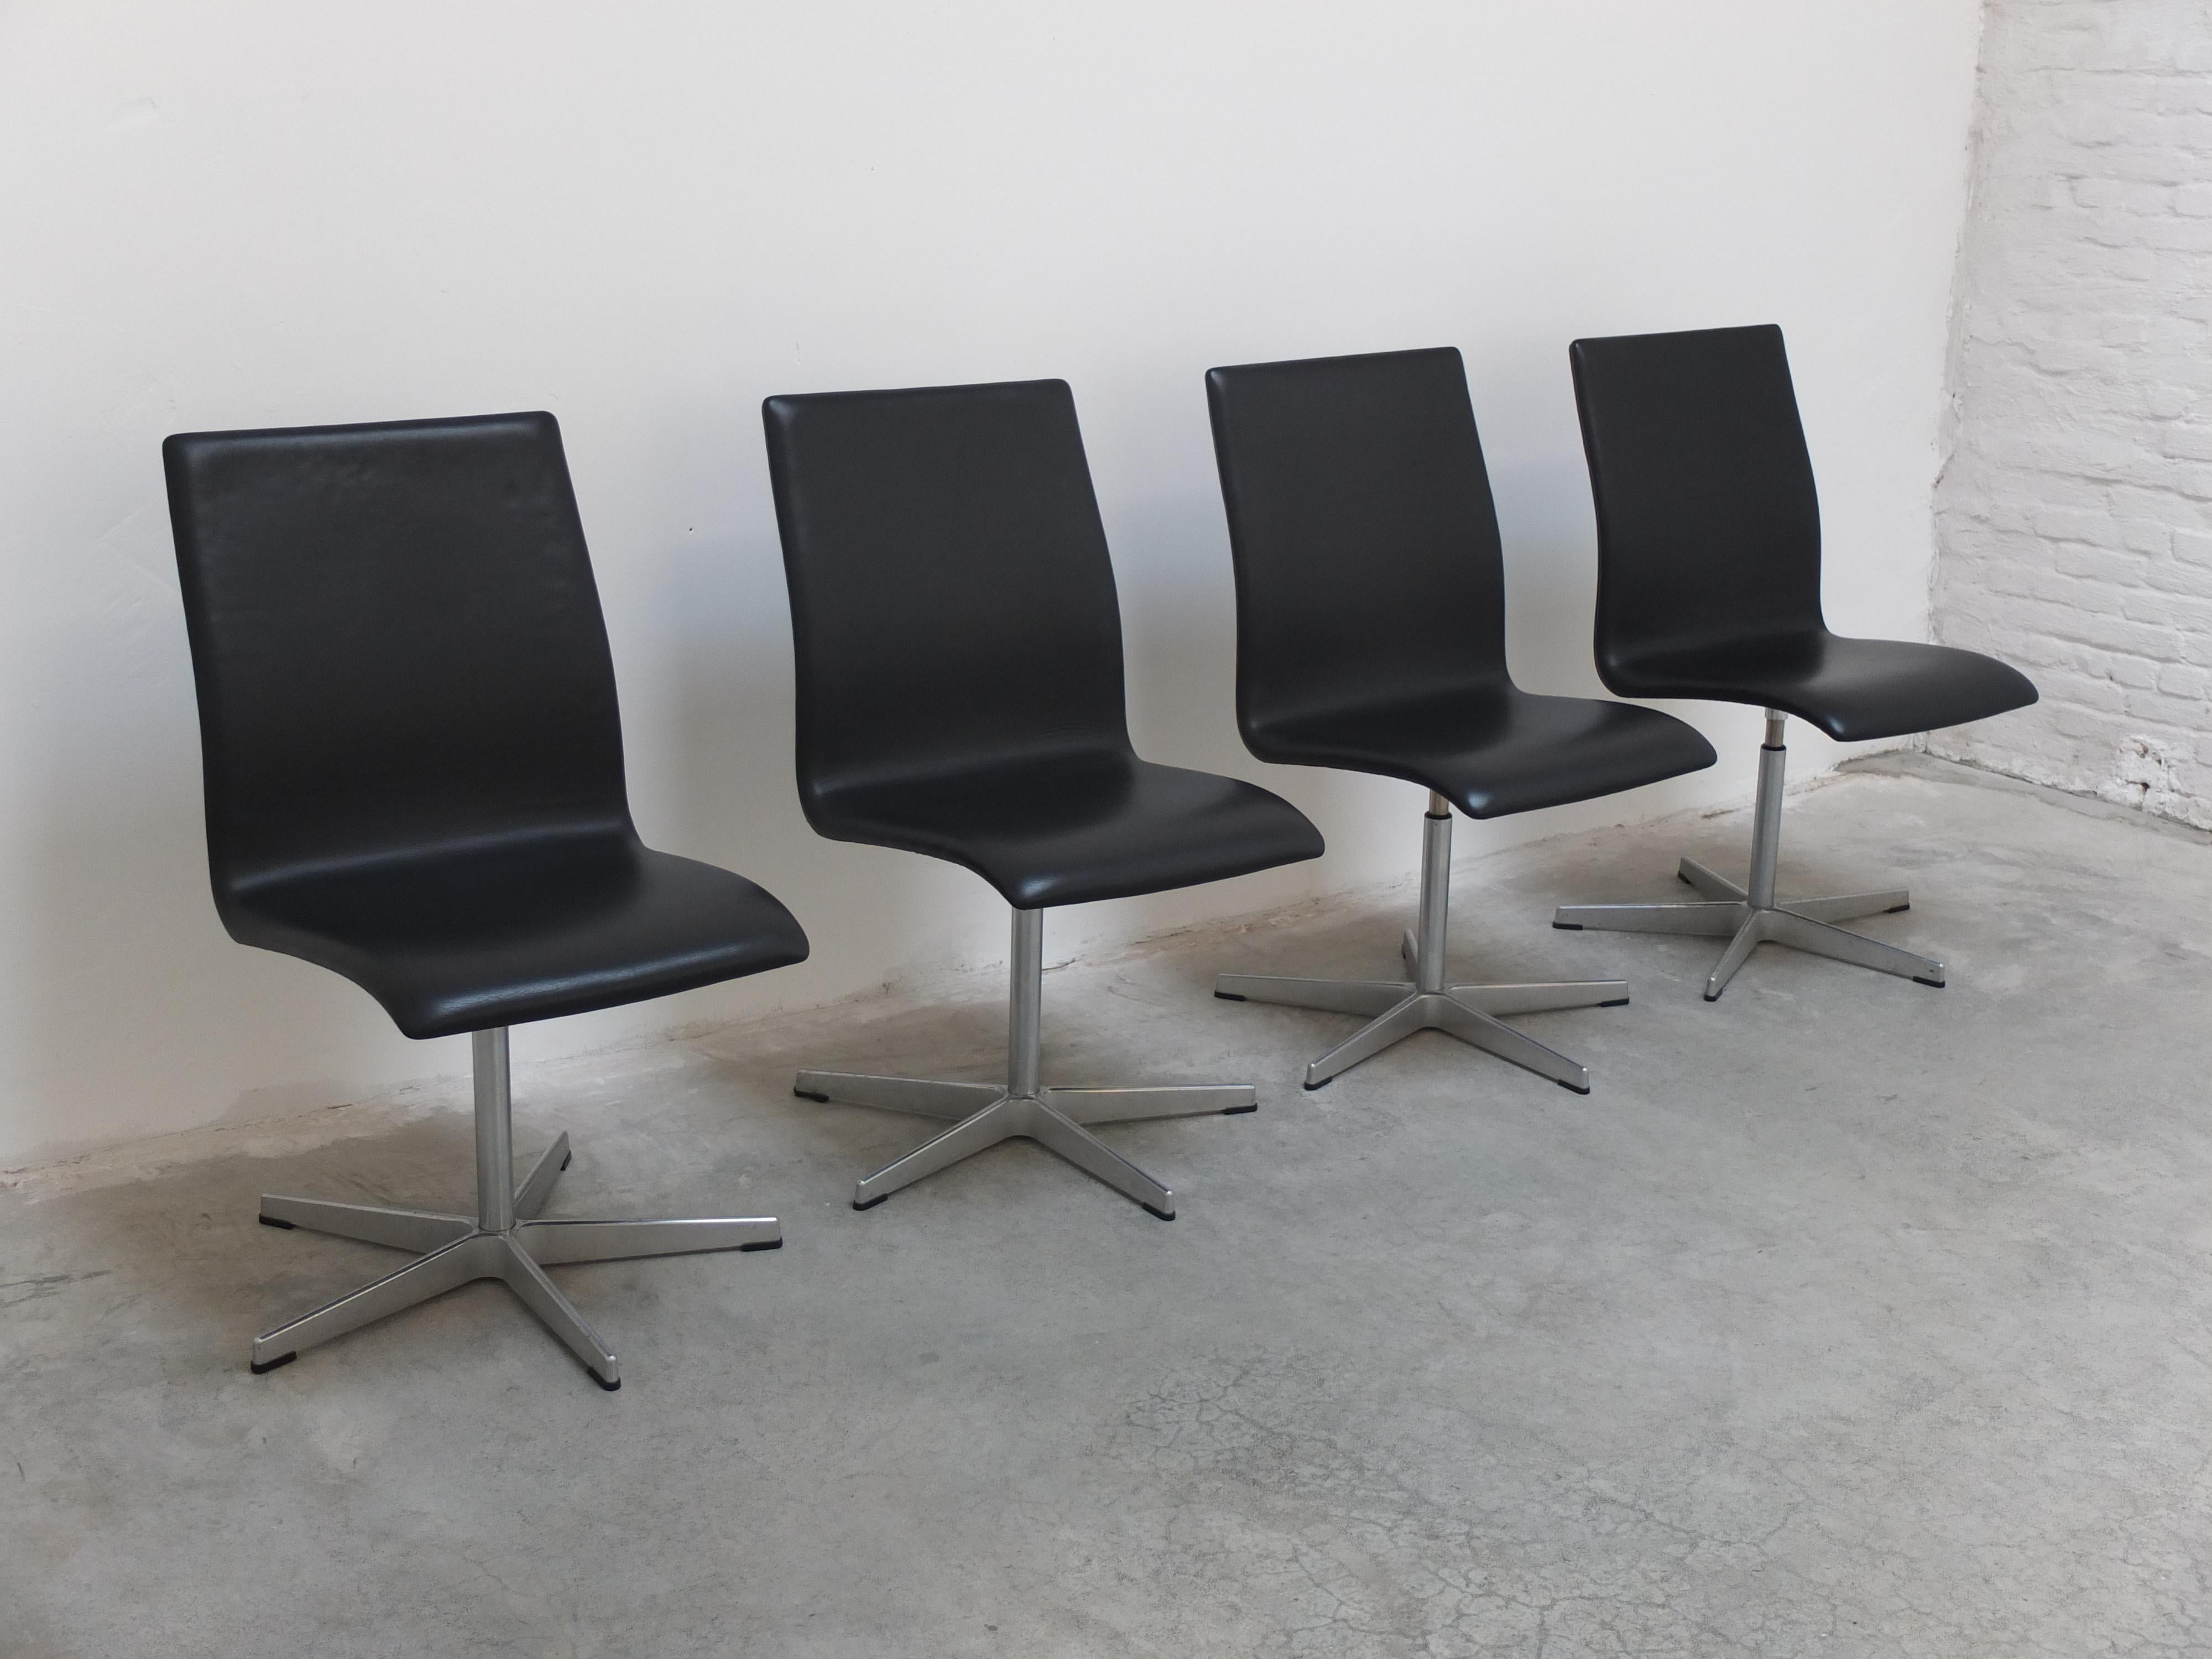 Danish Set of 4 'Oxford' Swivel Chairs by Arne Jacobsen for Fritz Hansen, 1965 For Sale